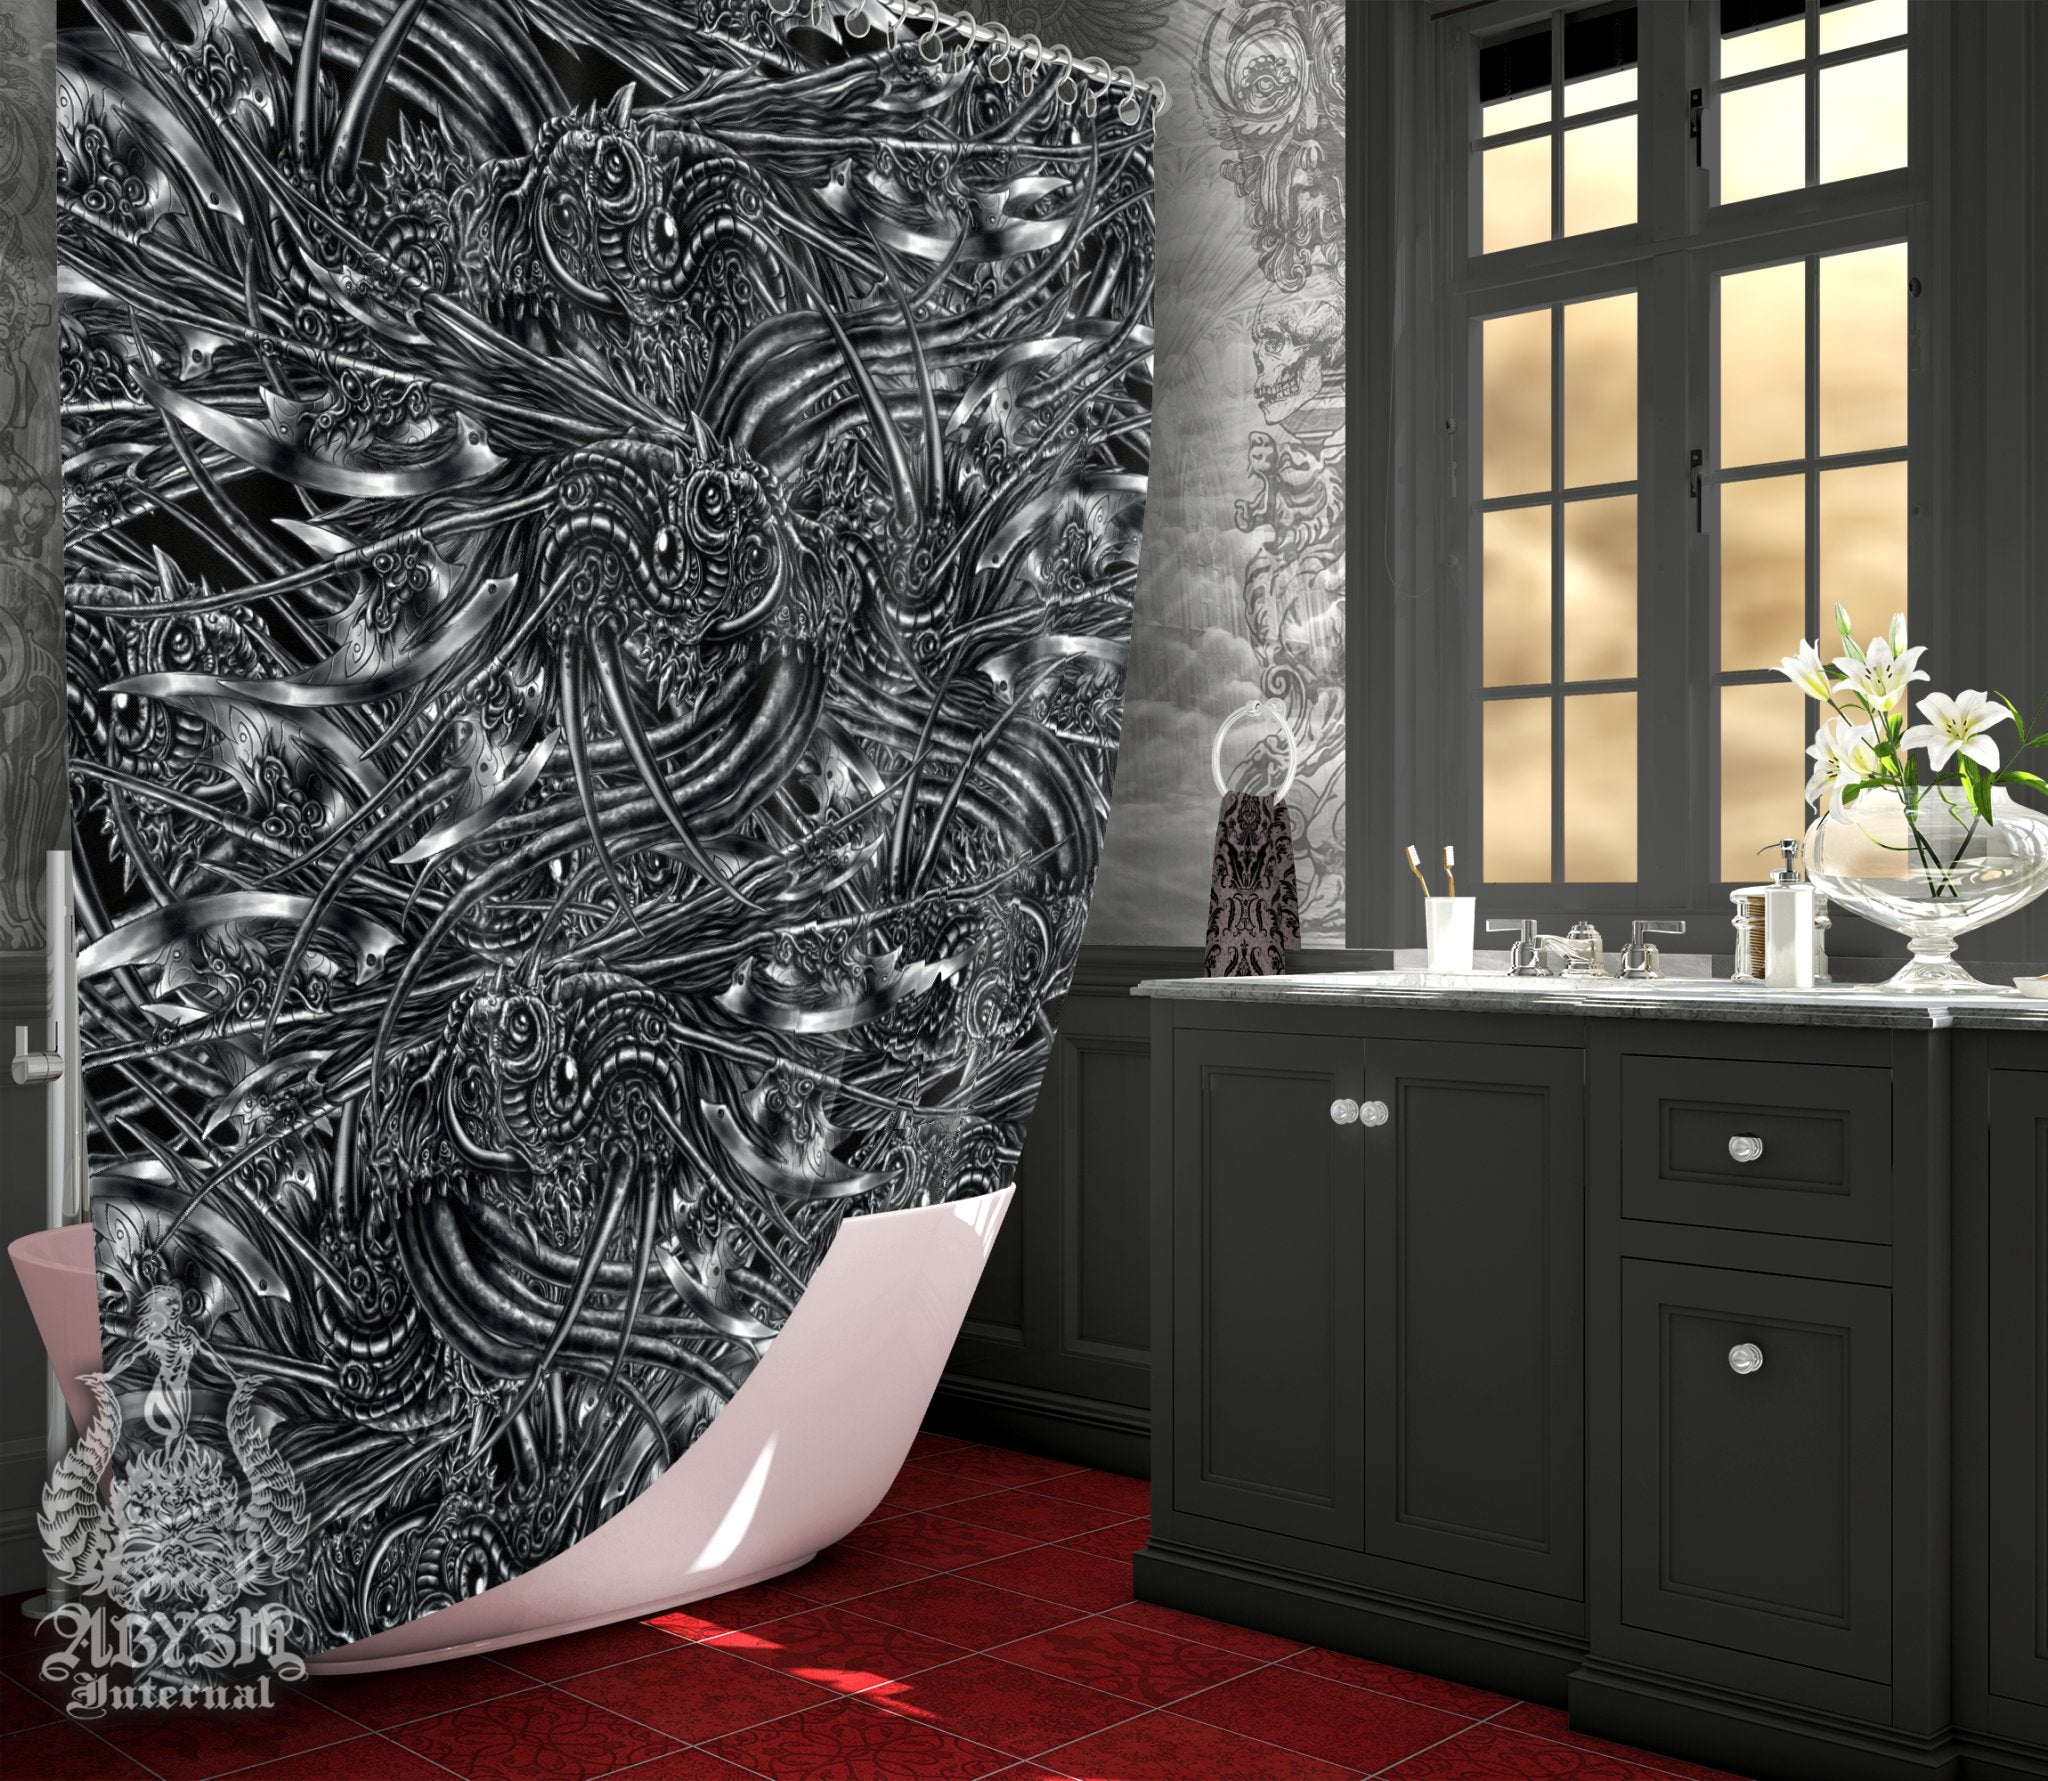 Goth Alien Shower Curtain, 71x74 inches, Dark Abstract Fantasy Art, Gothic Bathroom Decor - Abysm Internal